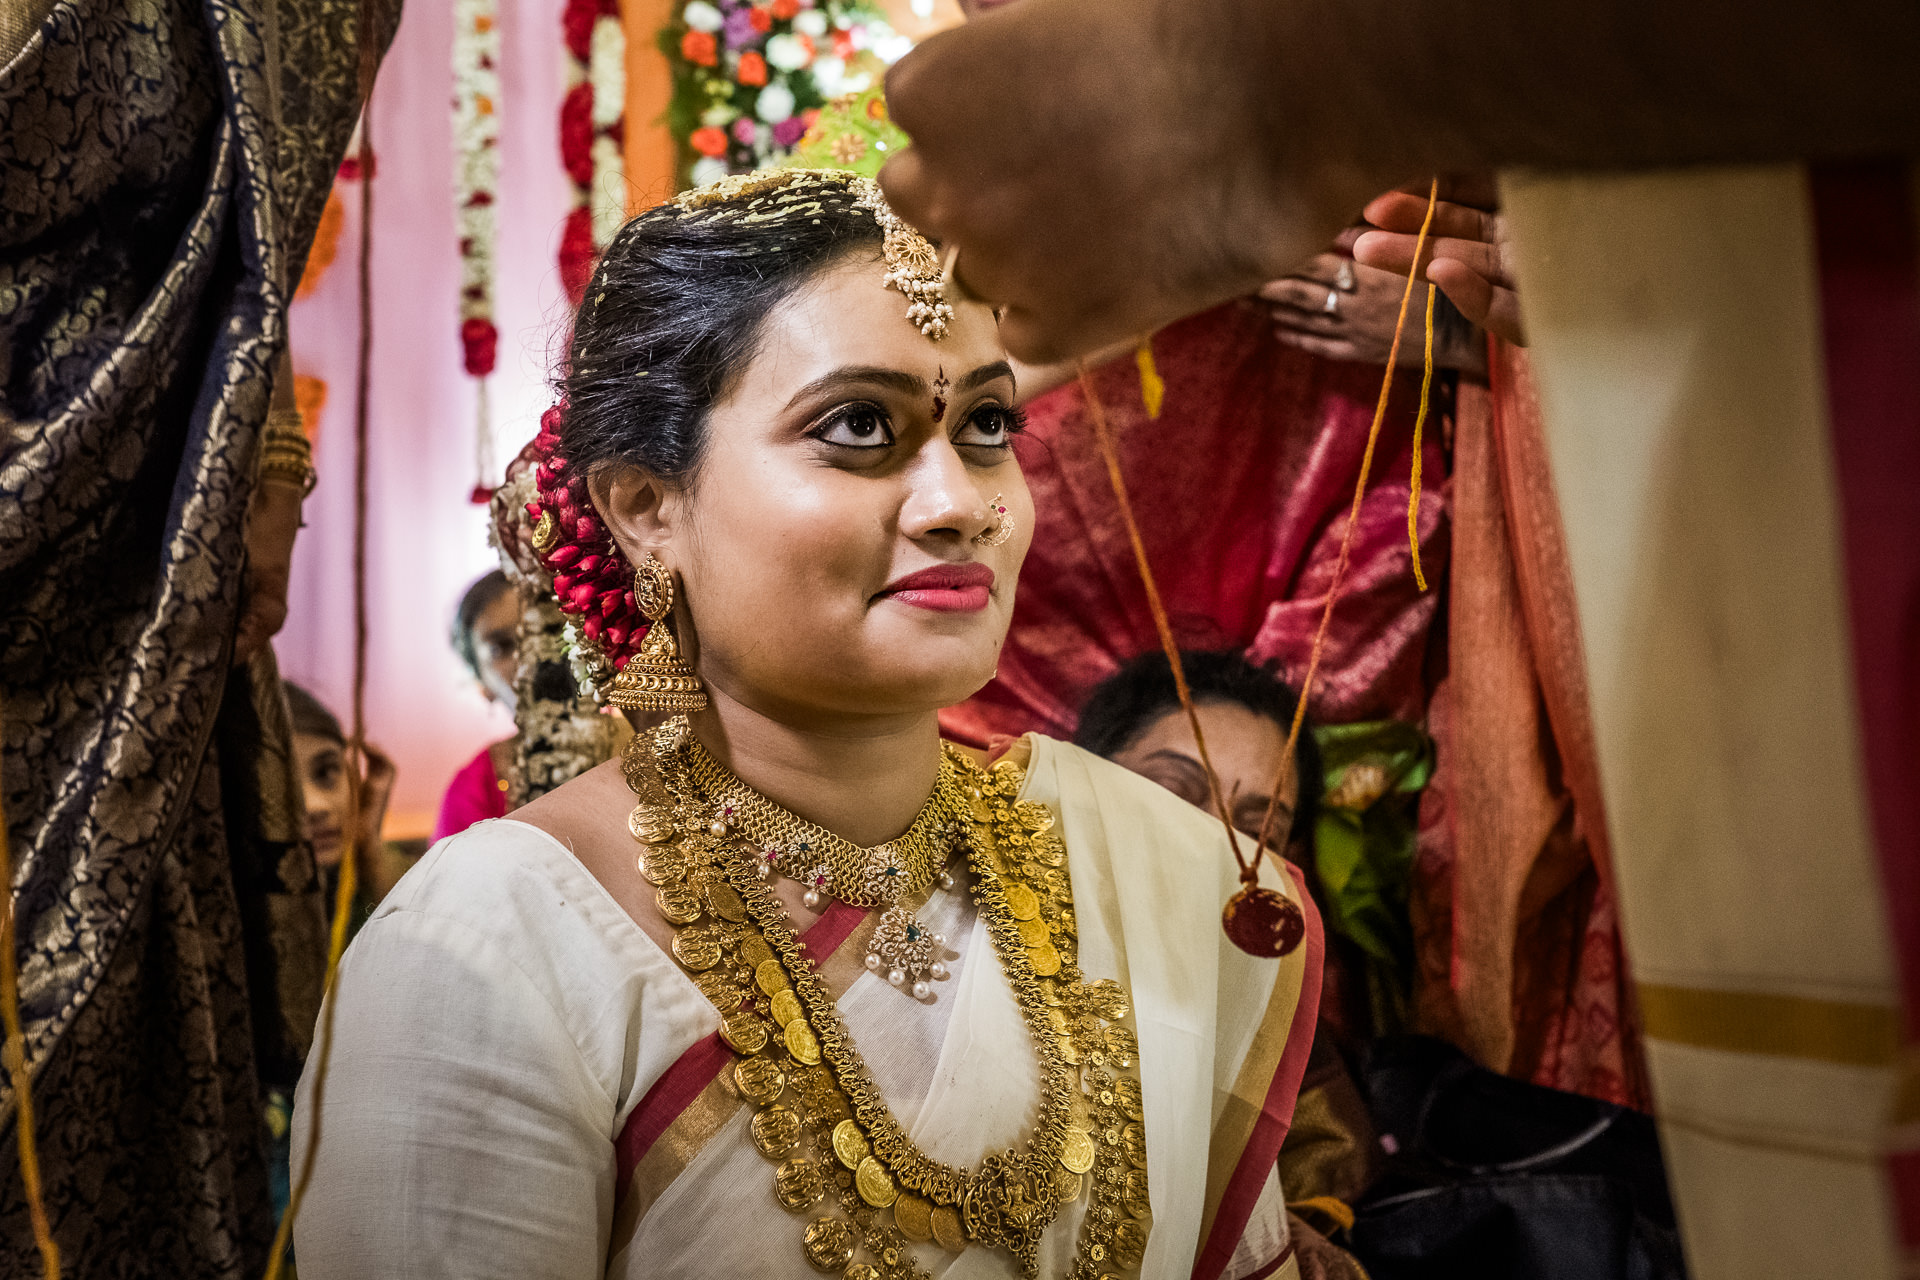 Capturing Traditional Telugu Weddings. A Colorful Traditional Telugu Wedding in Vijyawada.